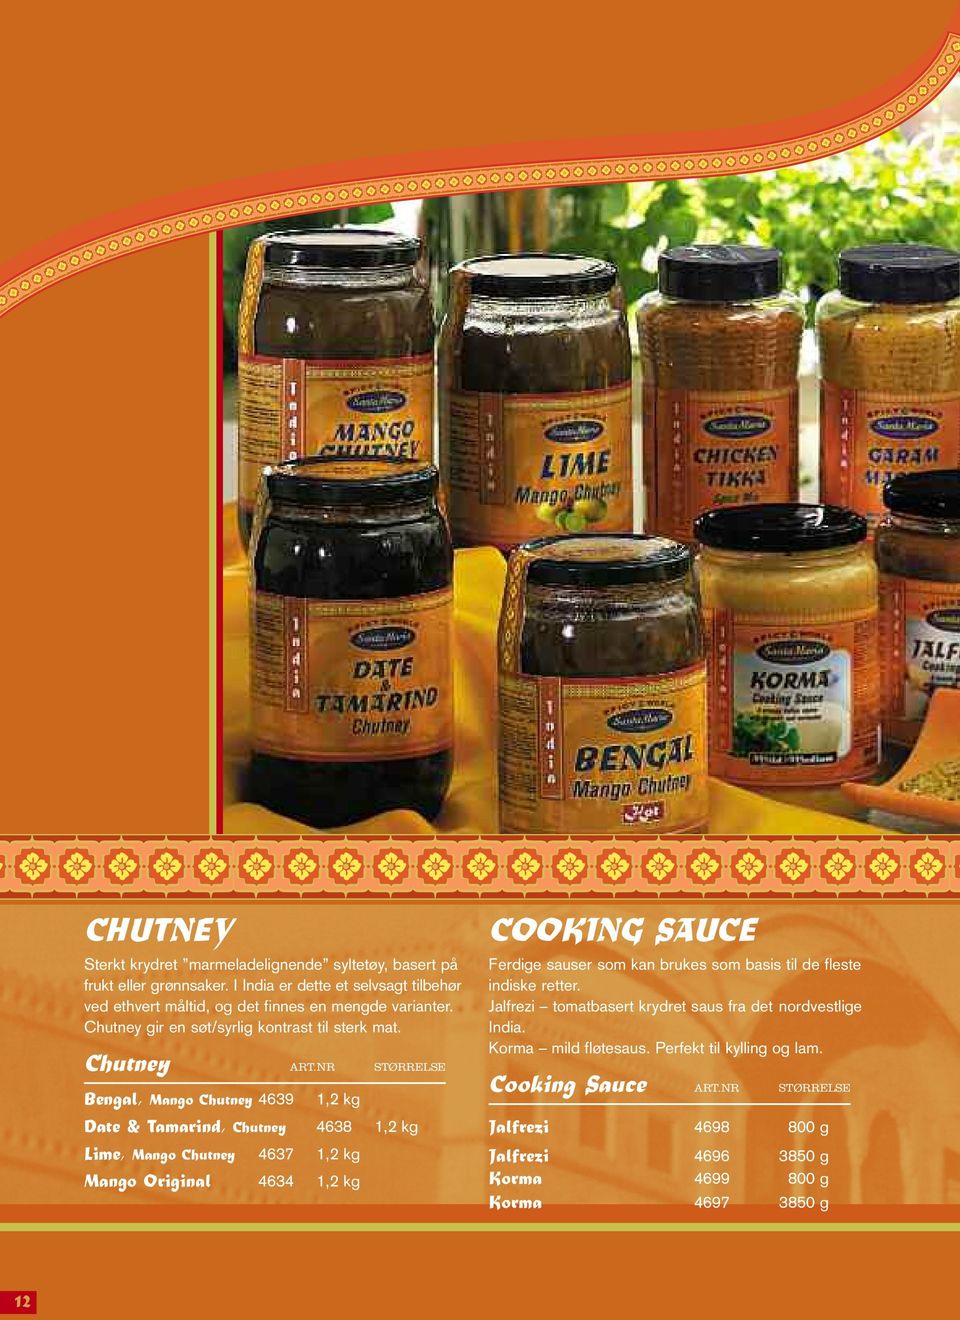 NR STØRRELSE Bengal, Mango Chutney 4639 1,2 kg Date & Tamarind, Chutney 4638 1,2 kg Lime, Mango Chutney 4637 1,2 kg Mango Original 4634 1,2 kg COOKING SAUCE Ferdige sauser